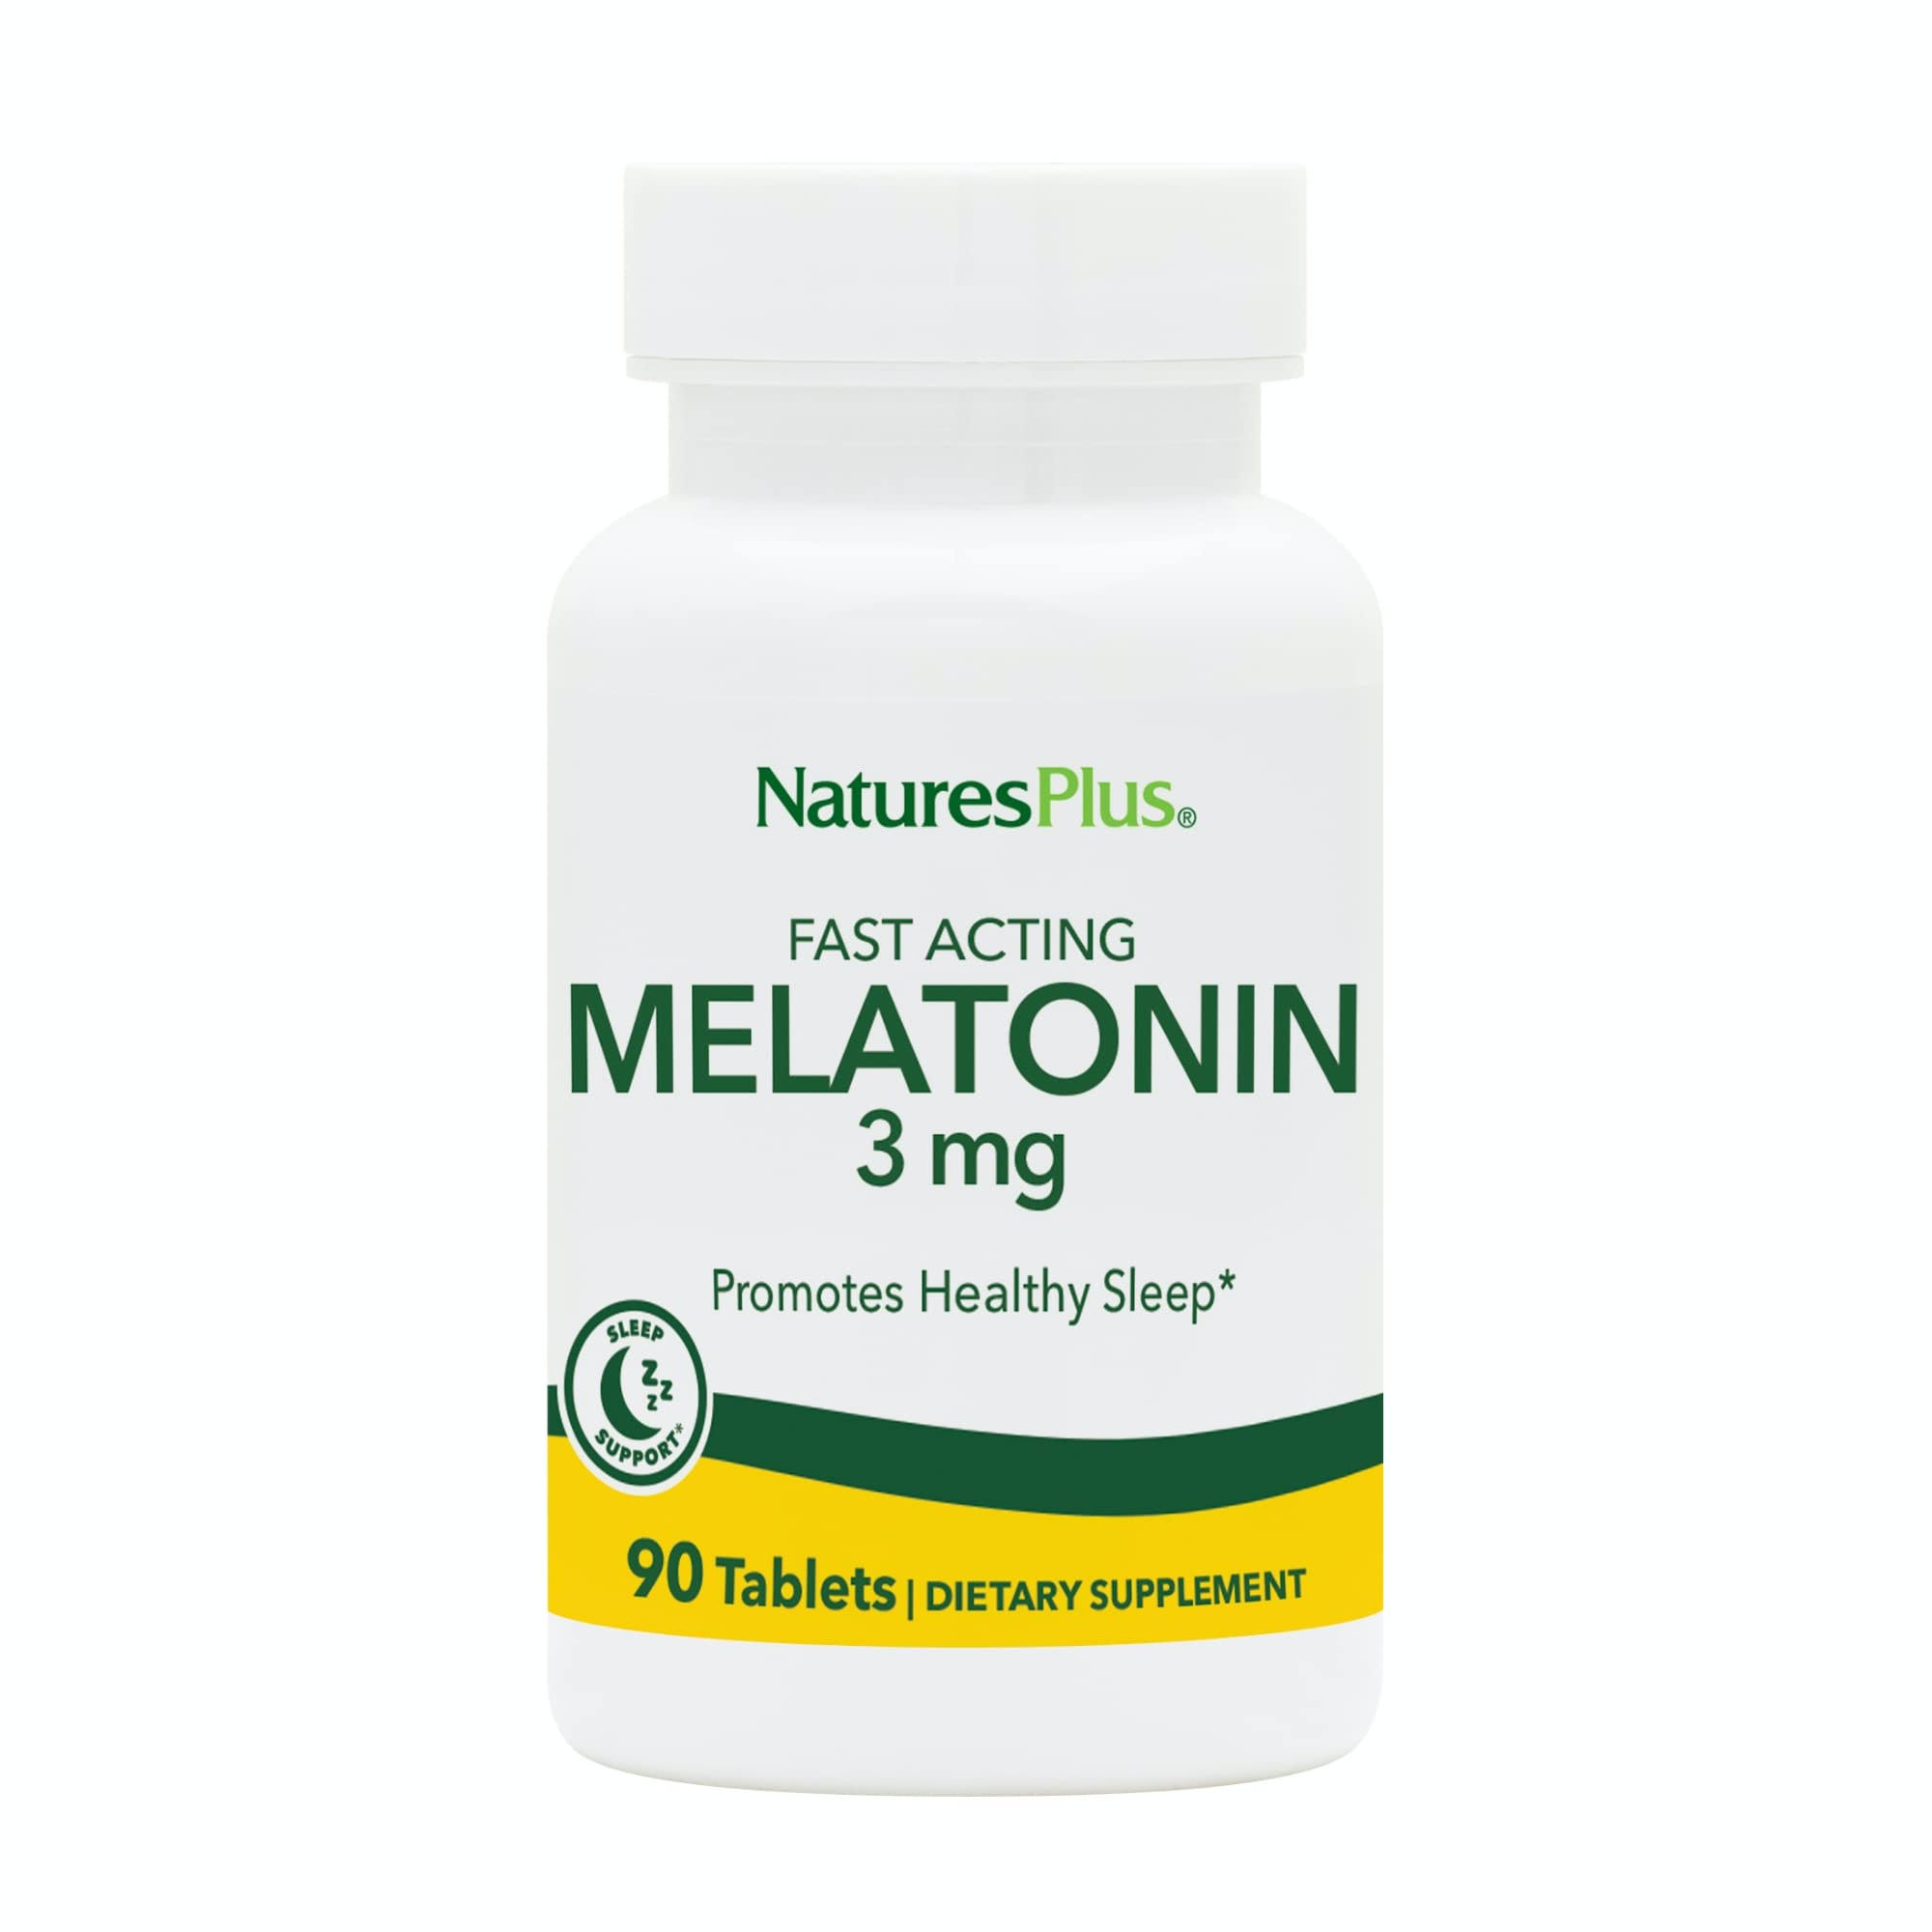 NaturesPlus Melatonin 3 mg - 90 Tablets